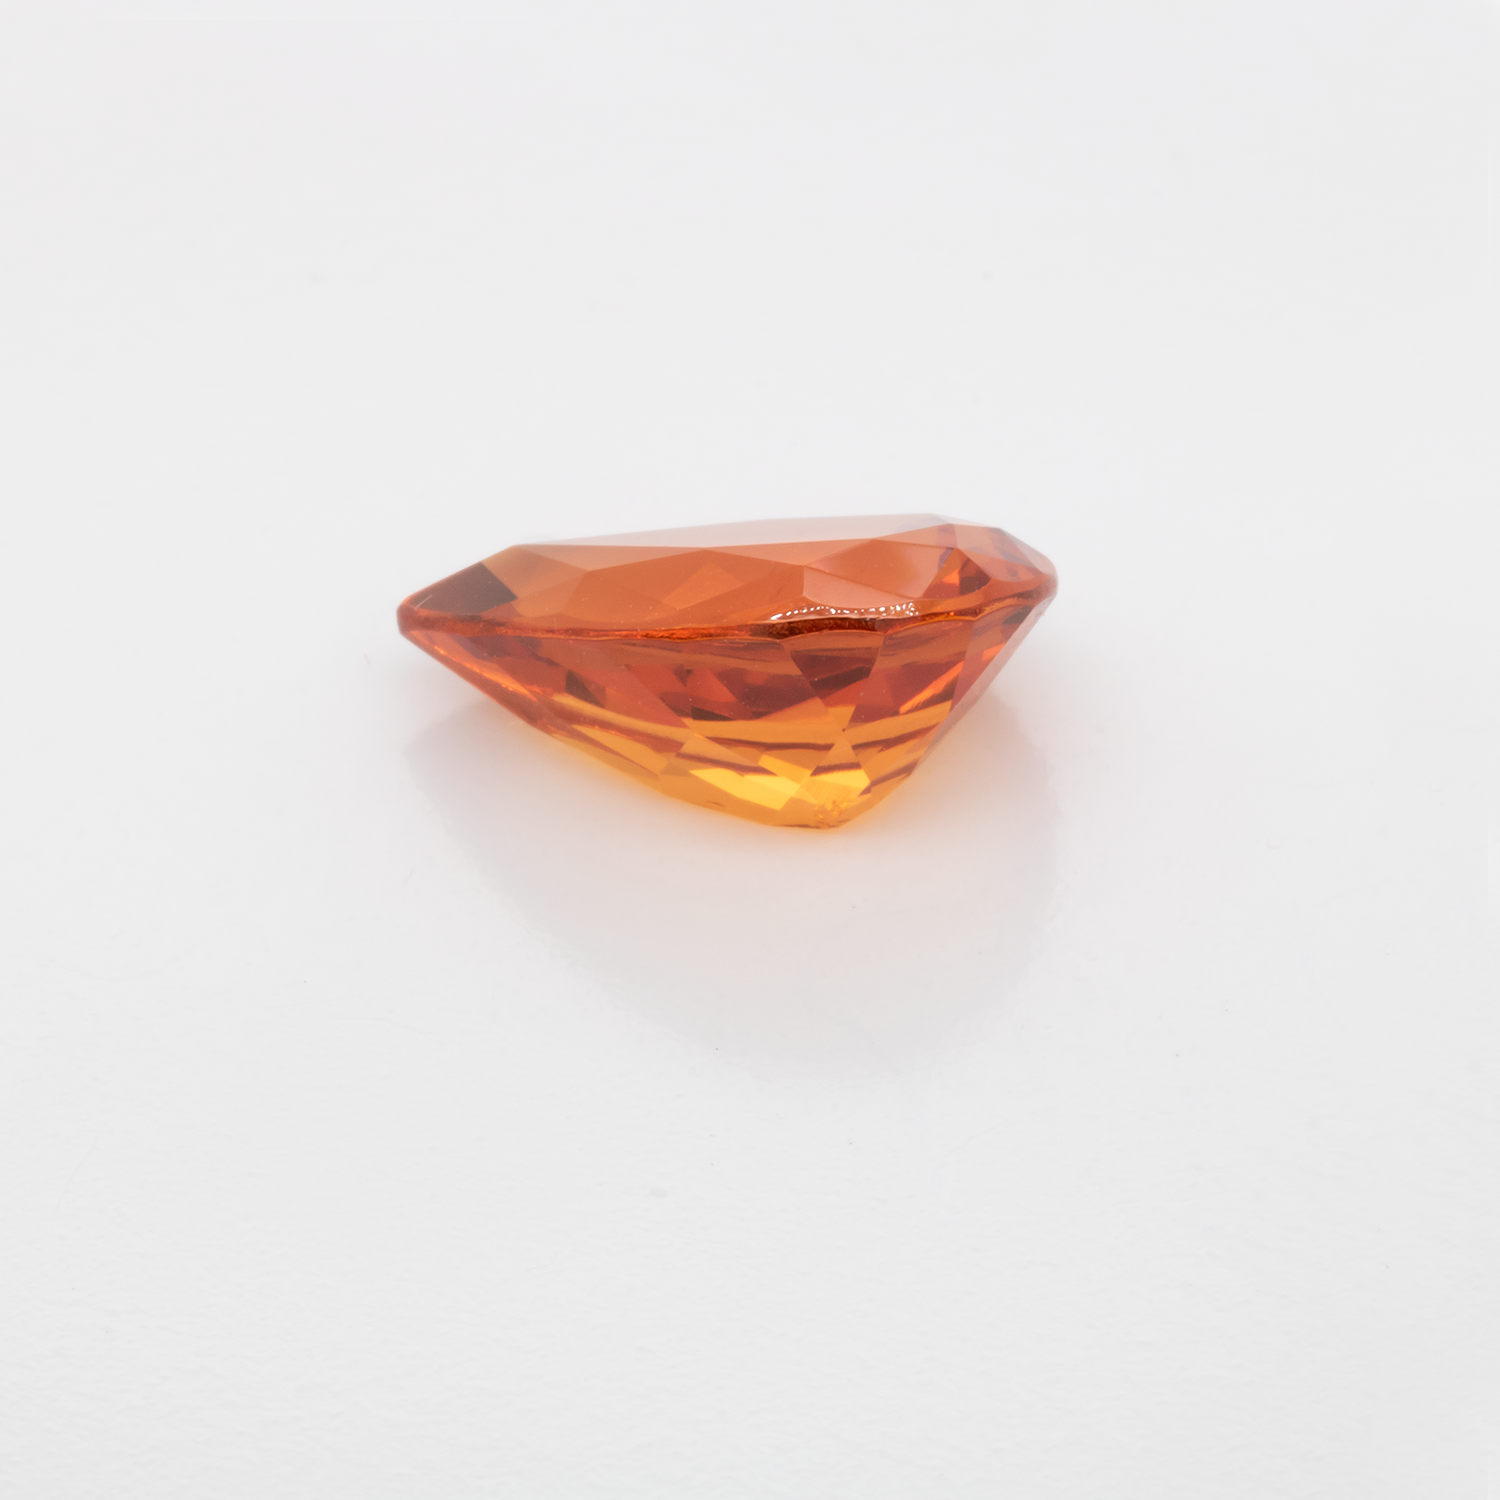 Mandarin Granat - orange, birnform, 11.9x8.1 mm, 3.90 cts, Nr. MG99057